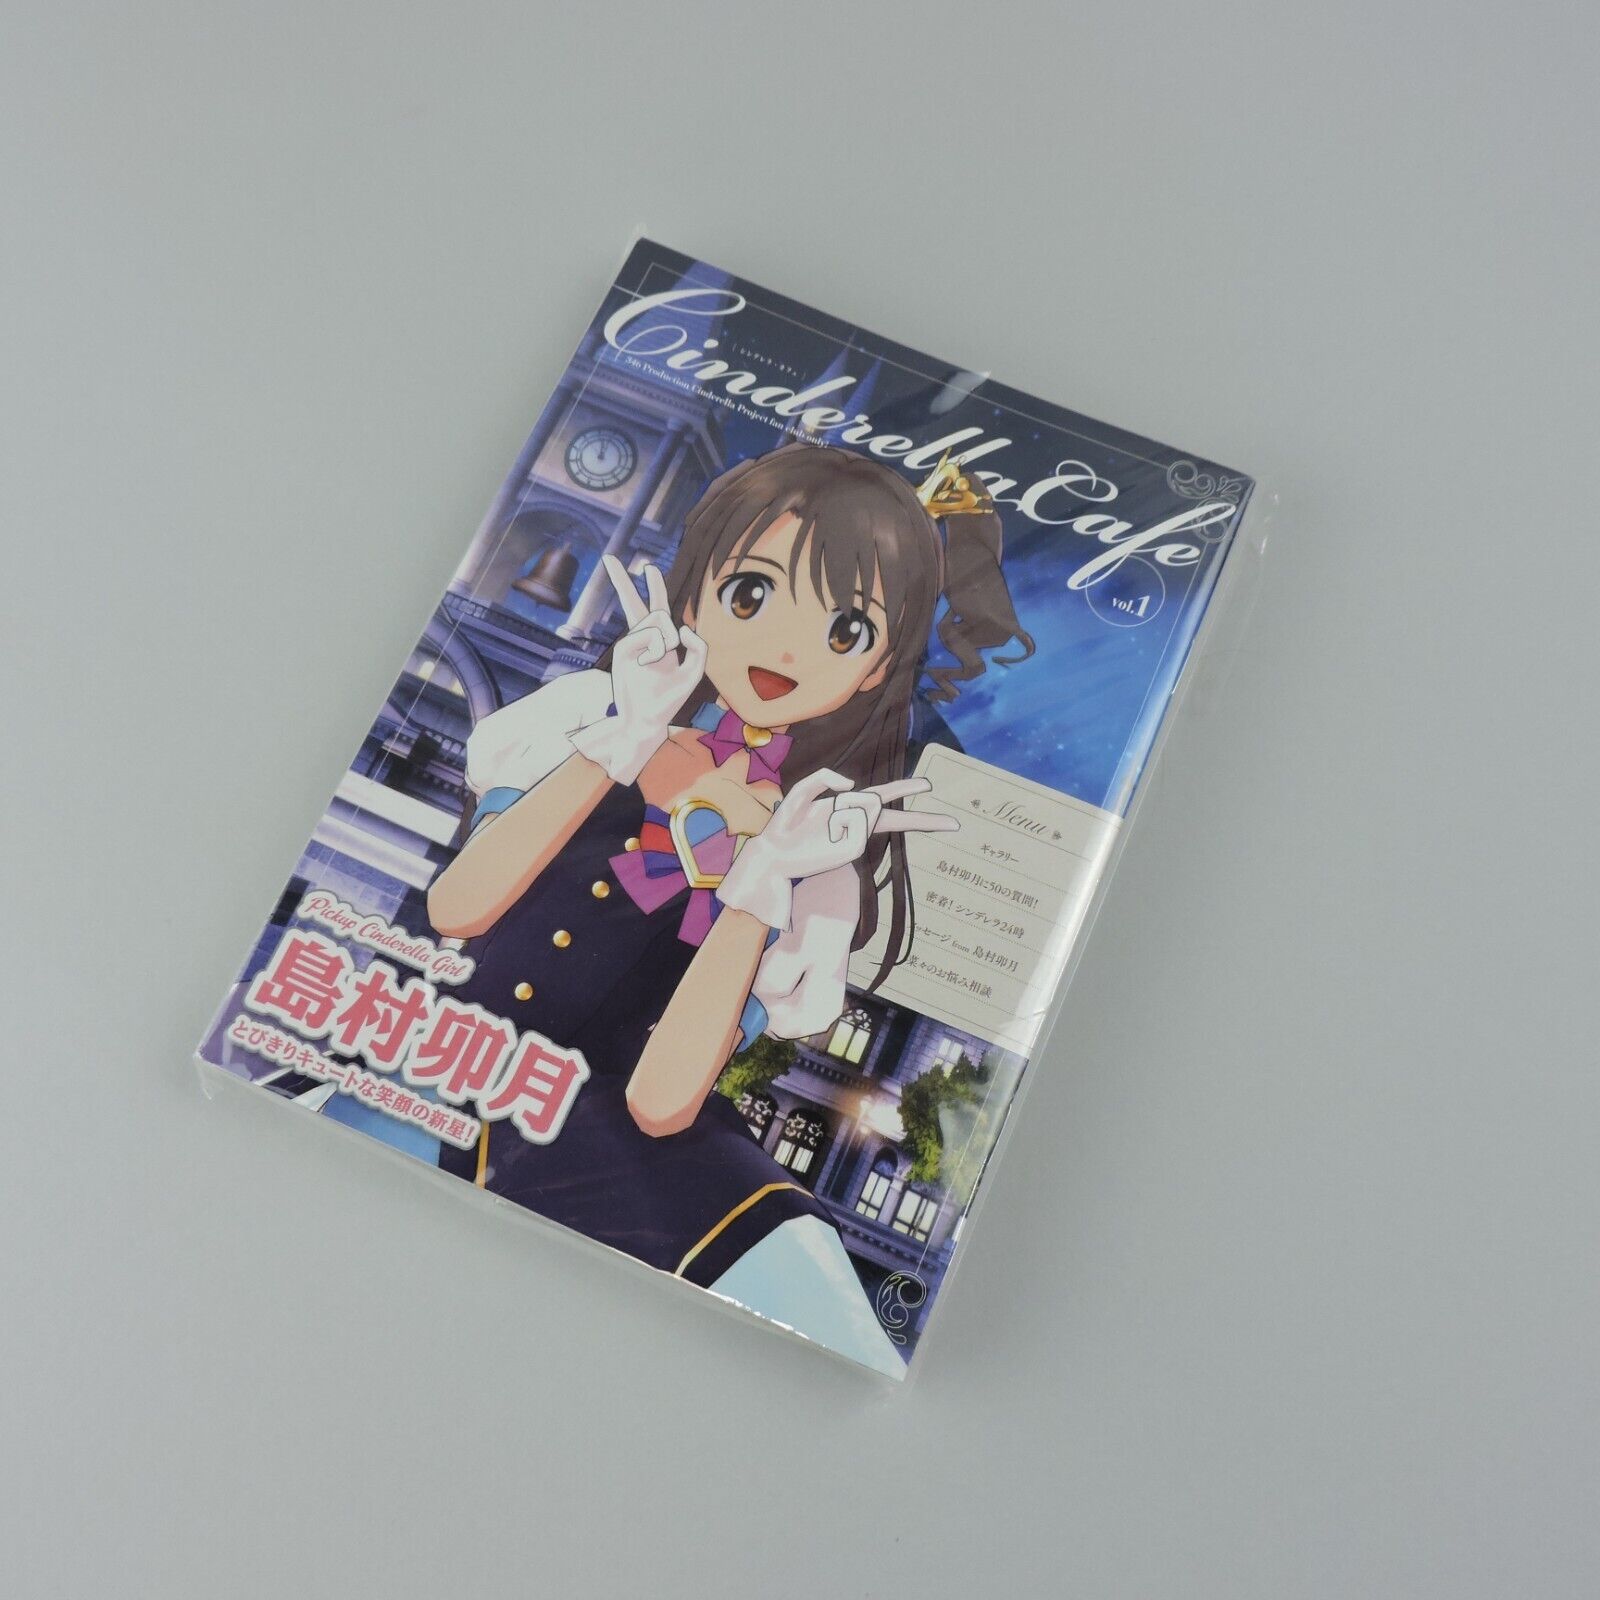 Lot of 9: Anime The iDOLM@STER: Cinderella Girls G4U Vol 1-9 Complete Set JAPAN